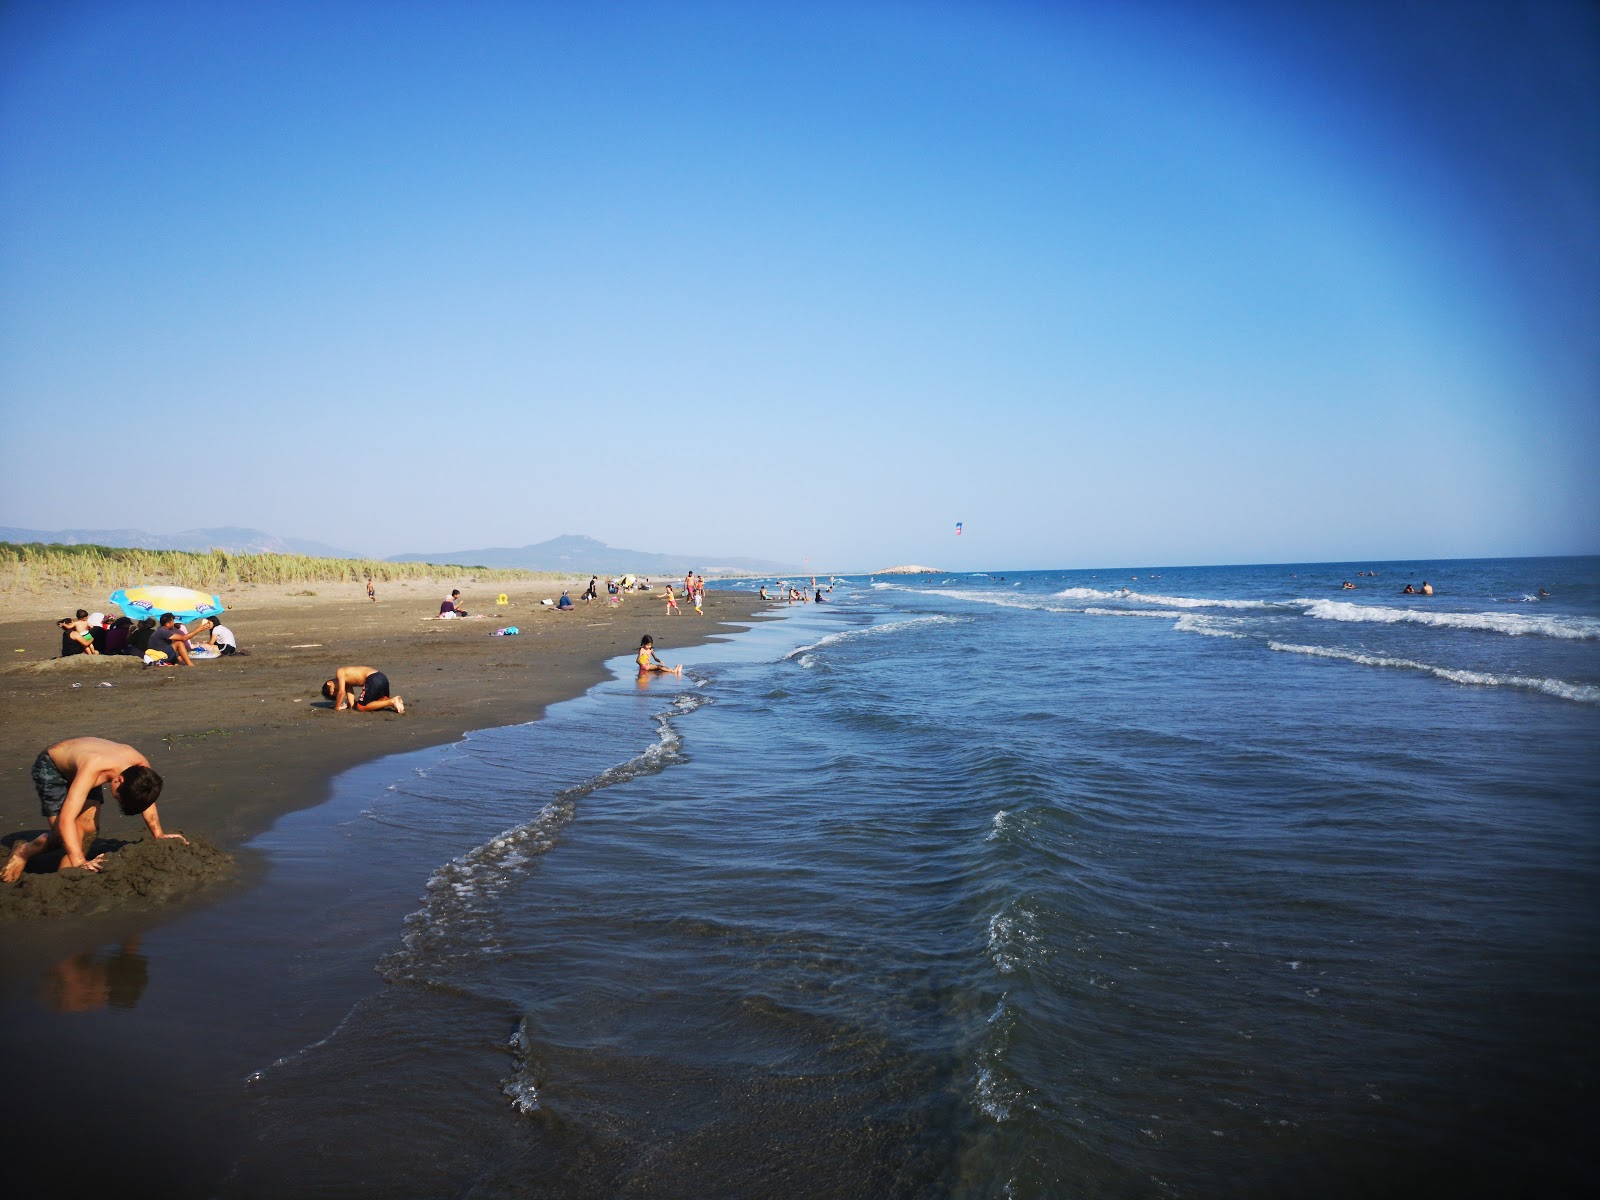 Fotografie cu Kumluova beach cu nivelul de curățenie in medie